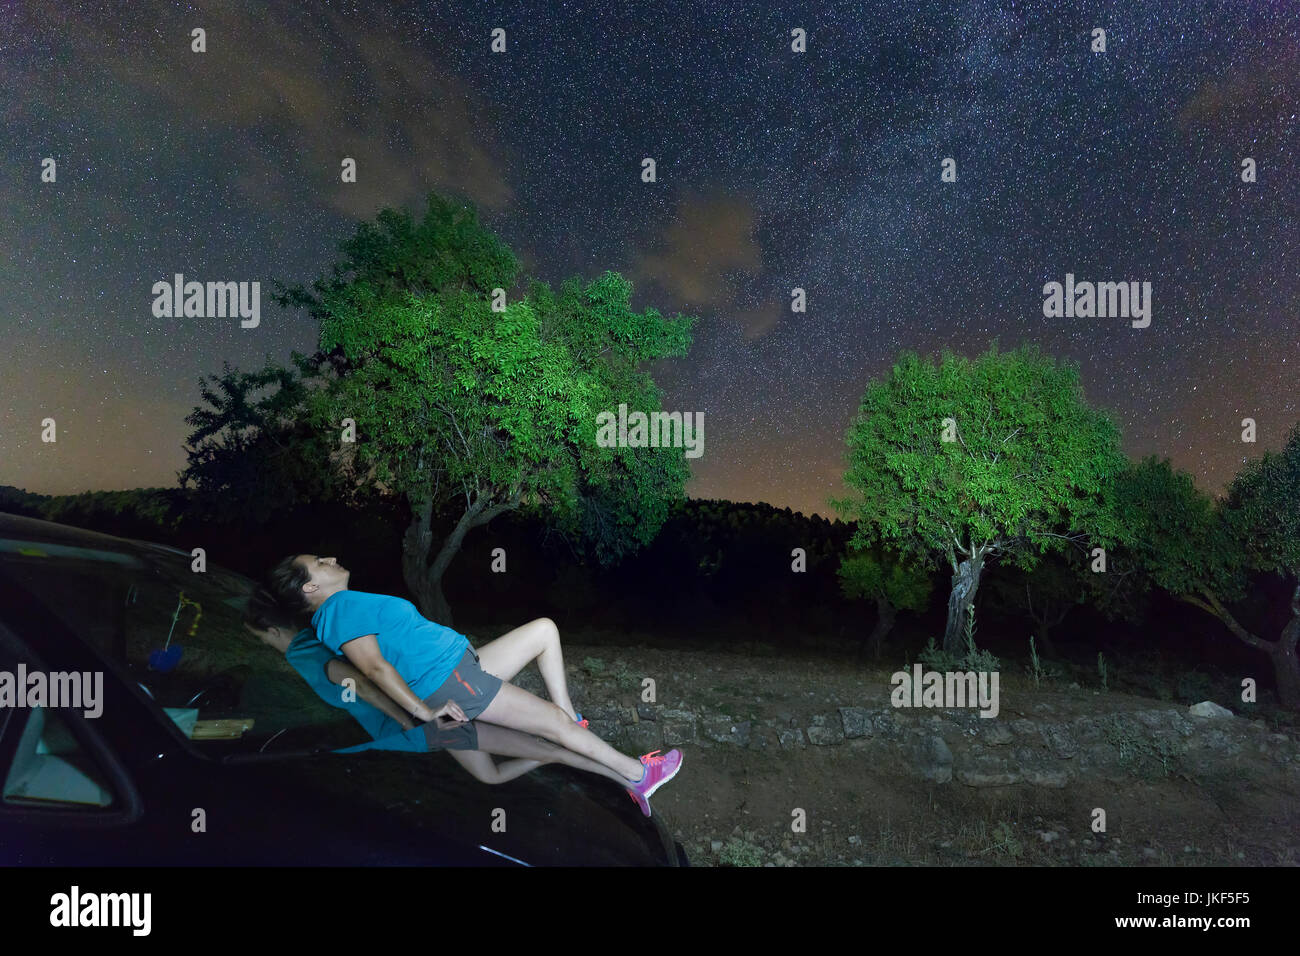 https://c8.alamy.com/comp/JKF5F5/woman-lying-on-top-of-a-night-car-in-the-starlight-shot-taken-in-the-JKF5F5.jpg